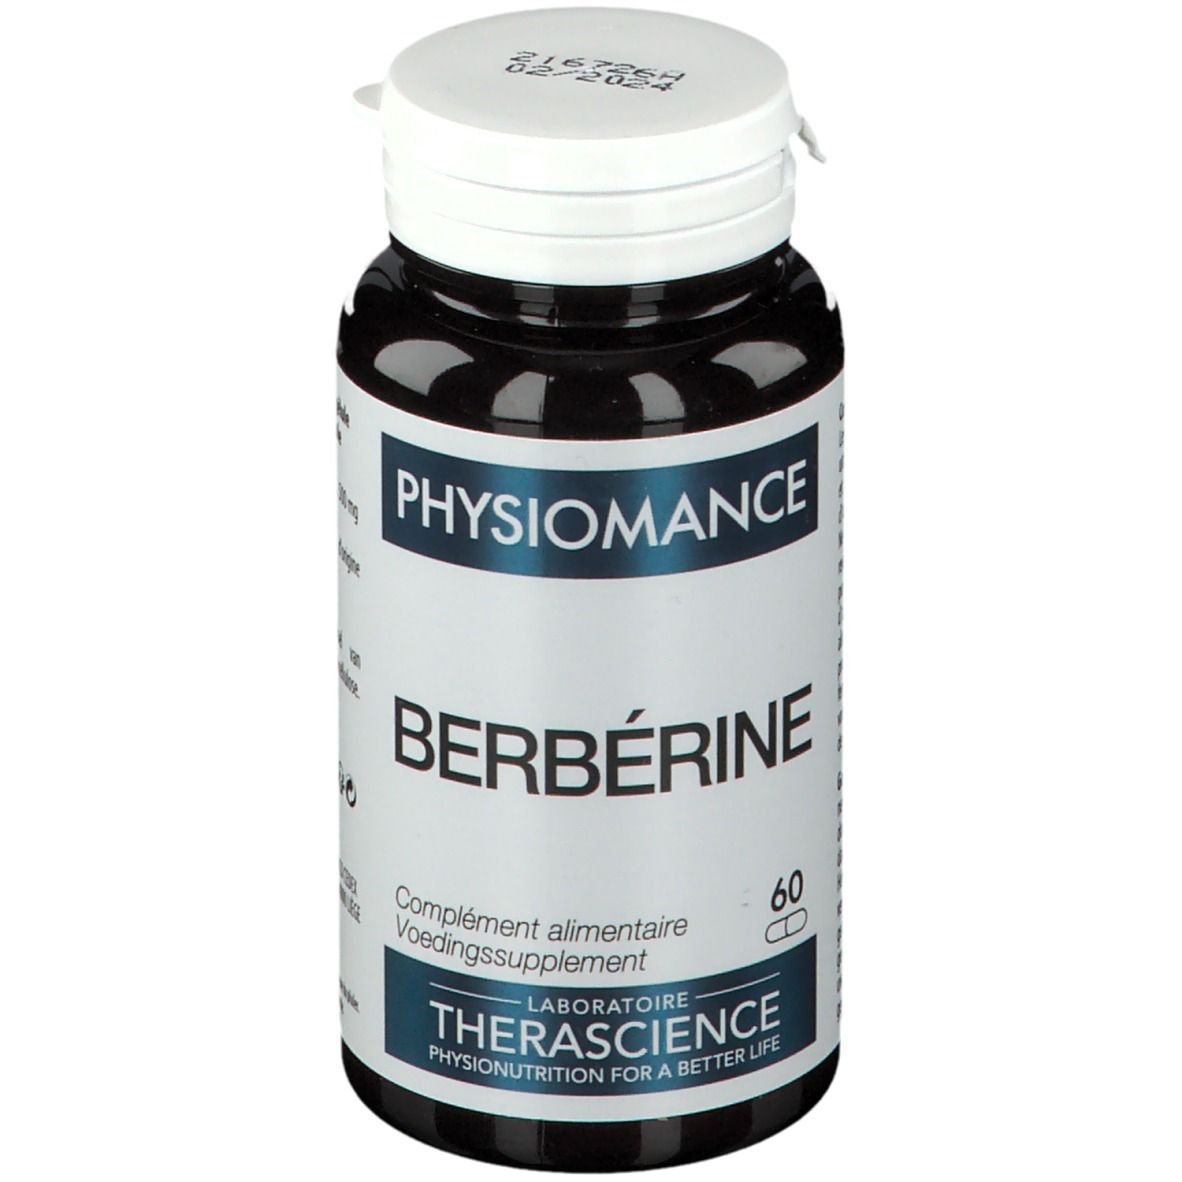 THERASCIENCE BELGIUM Physiomance Berberin Phy312B